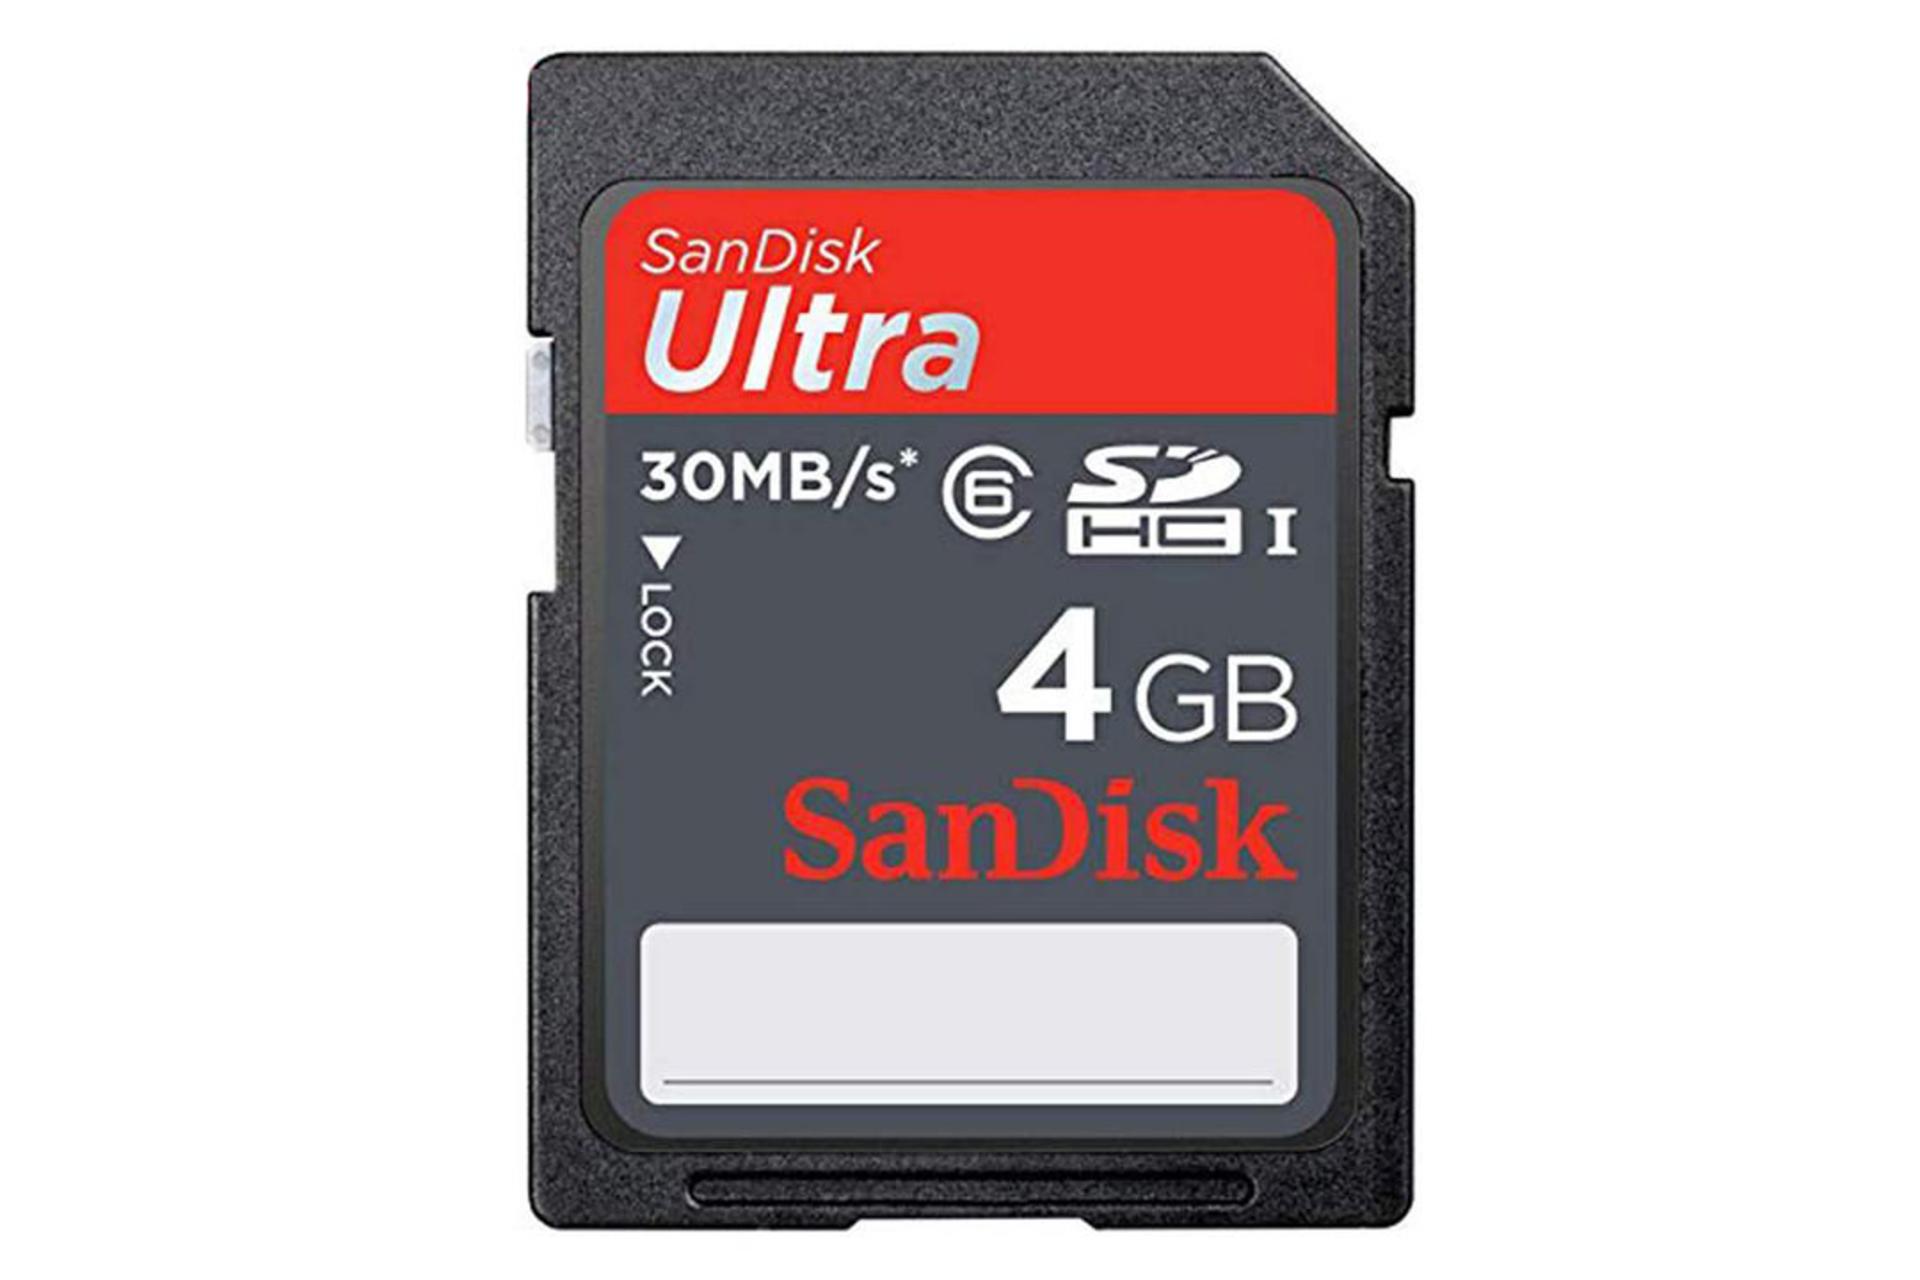 SanDisk Ultra SDHC Class 6 UHS-I U1 4GB